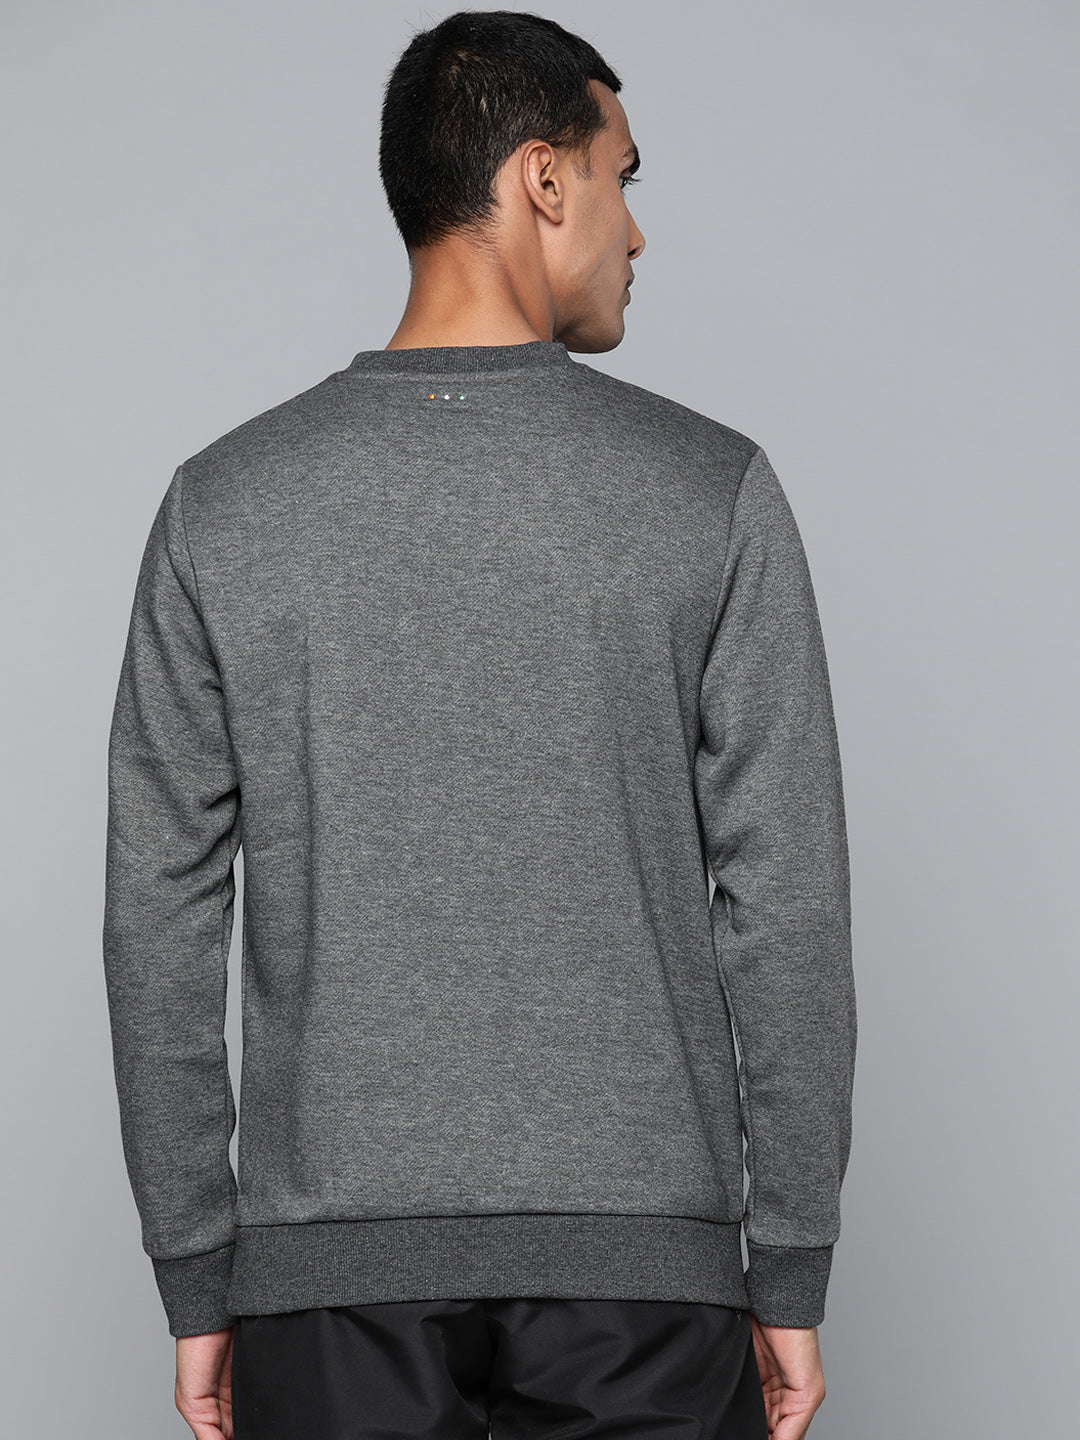 Alcis Men Charcoal Grey Solid Cotton Sweatshirt